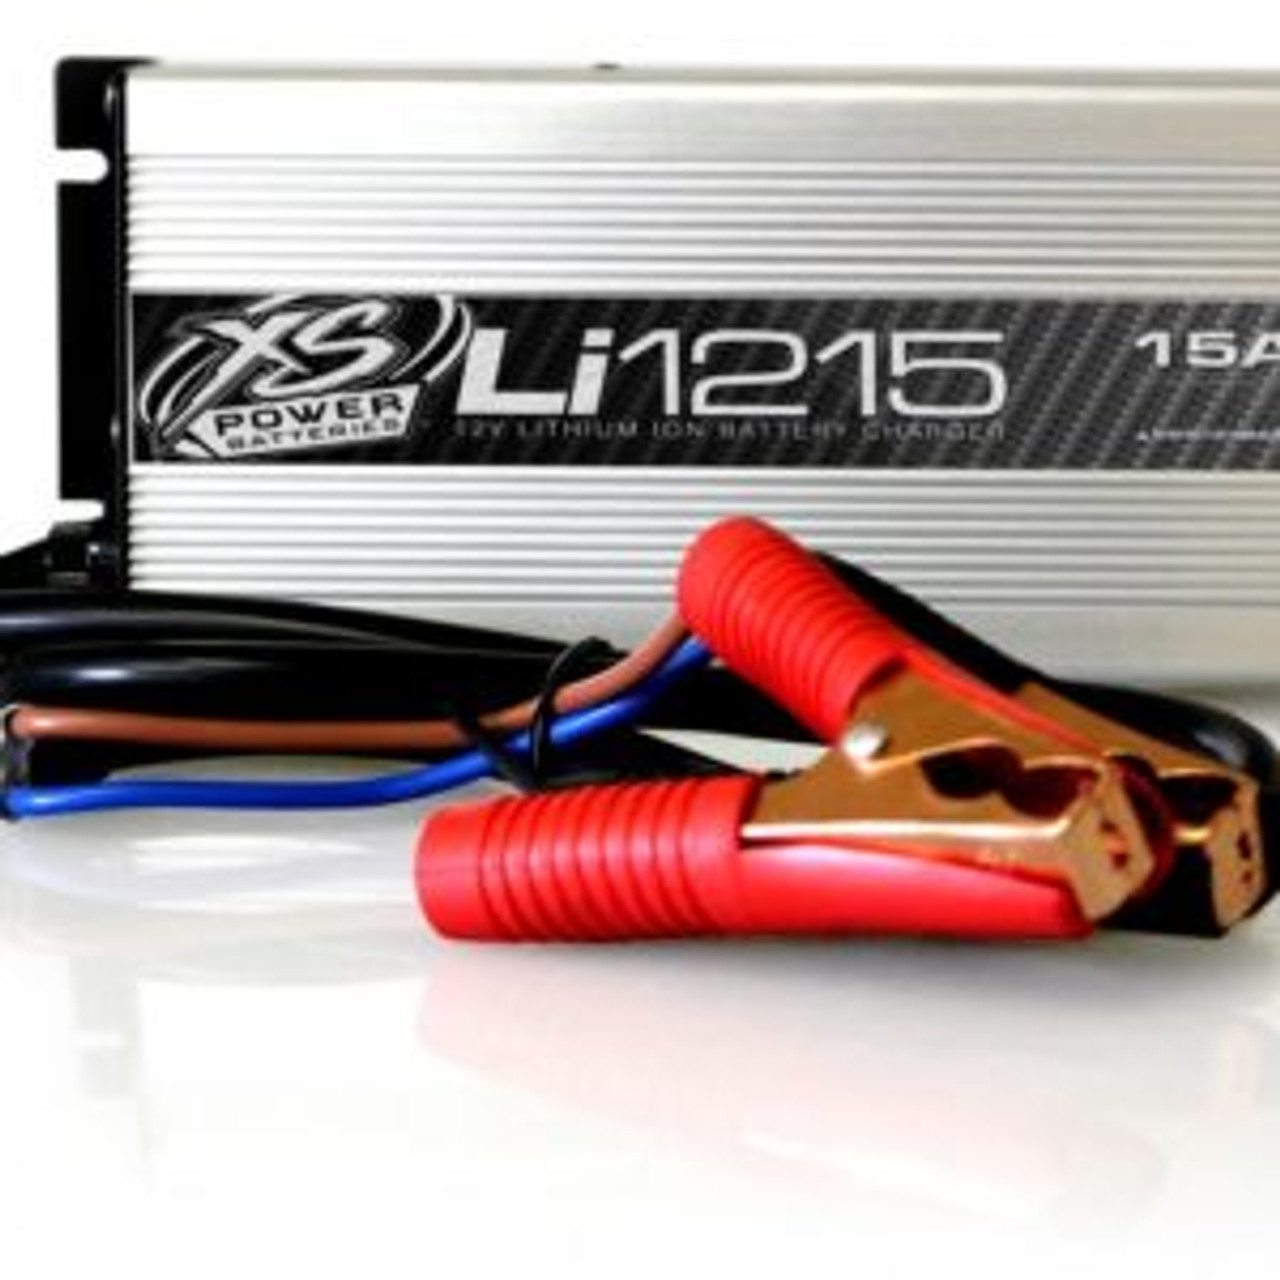 XS Power LI1215 – 15a 12v Lithium Battery Charger